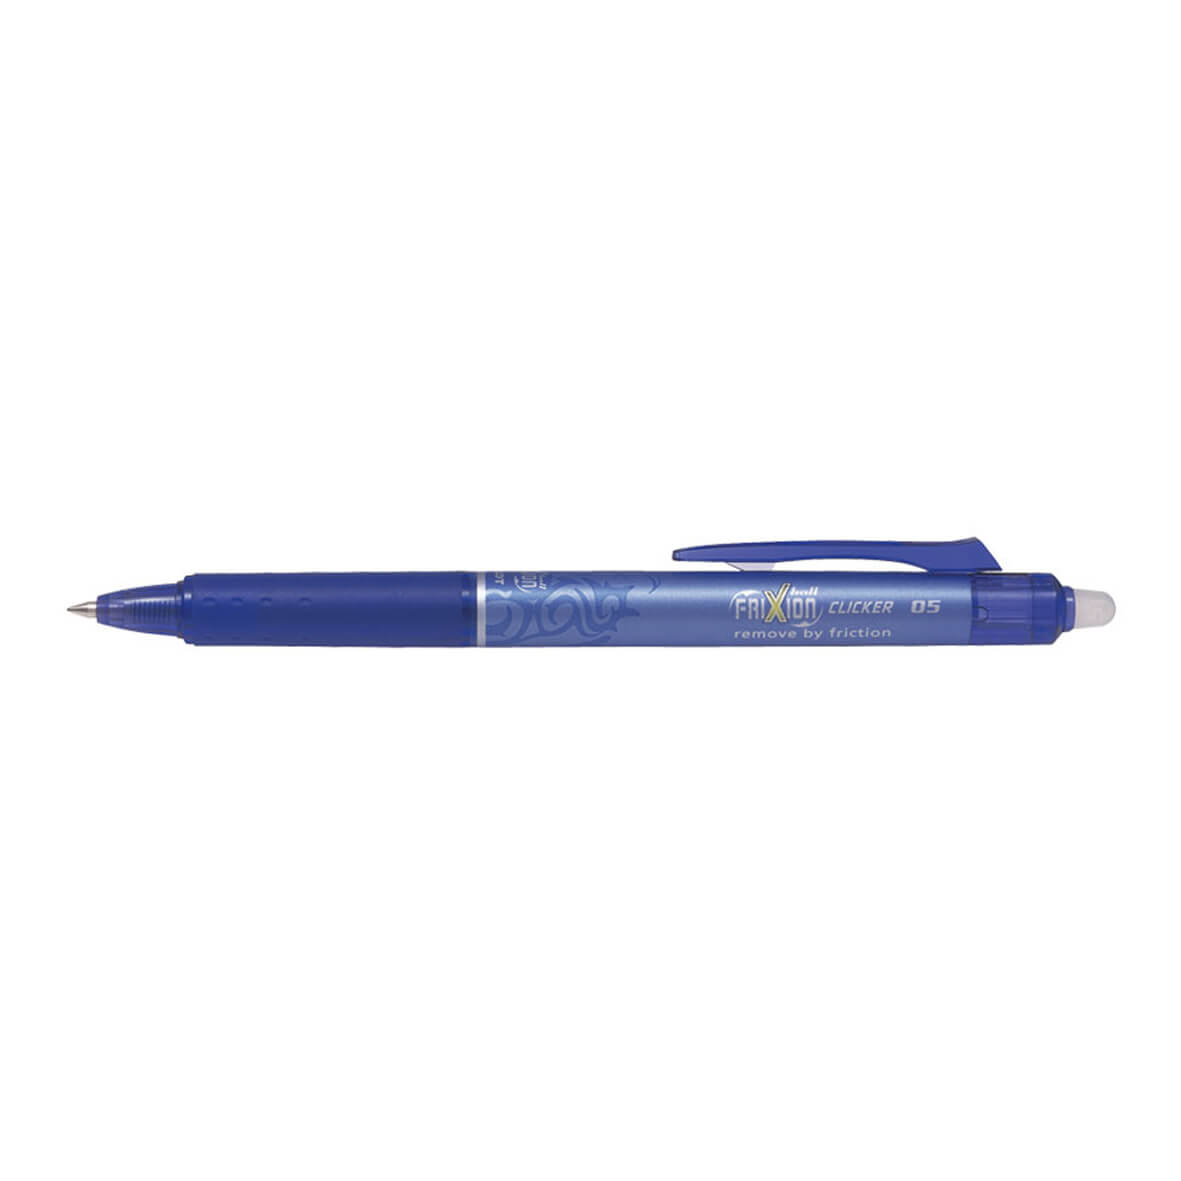 Alfabet Grillig Interactie Pilot FriXion Ball clicker pen | uitgumbare pen kopen | My Lovely Notebook